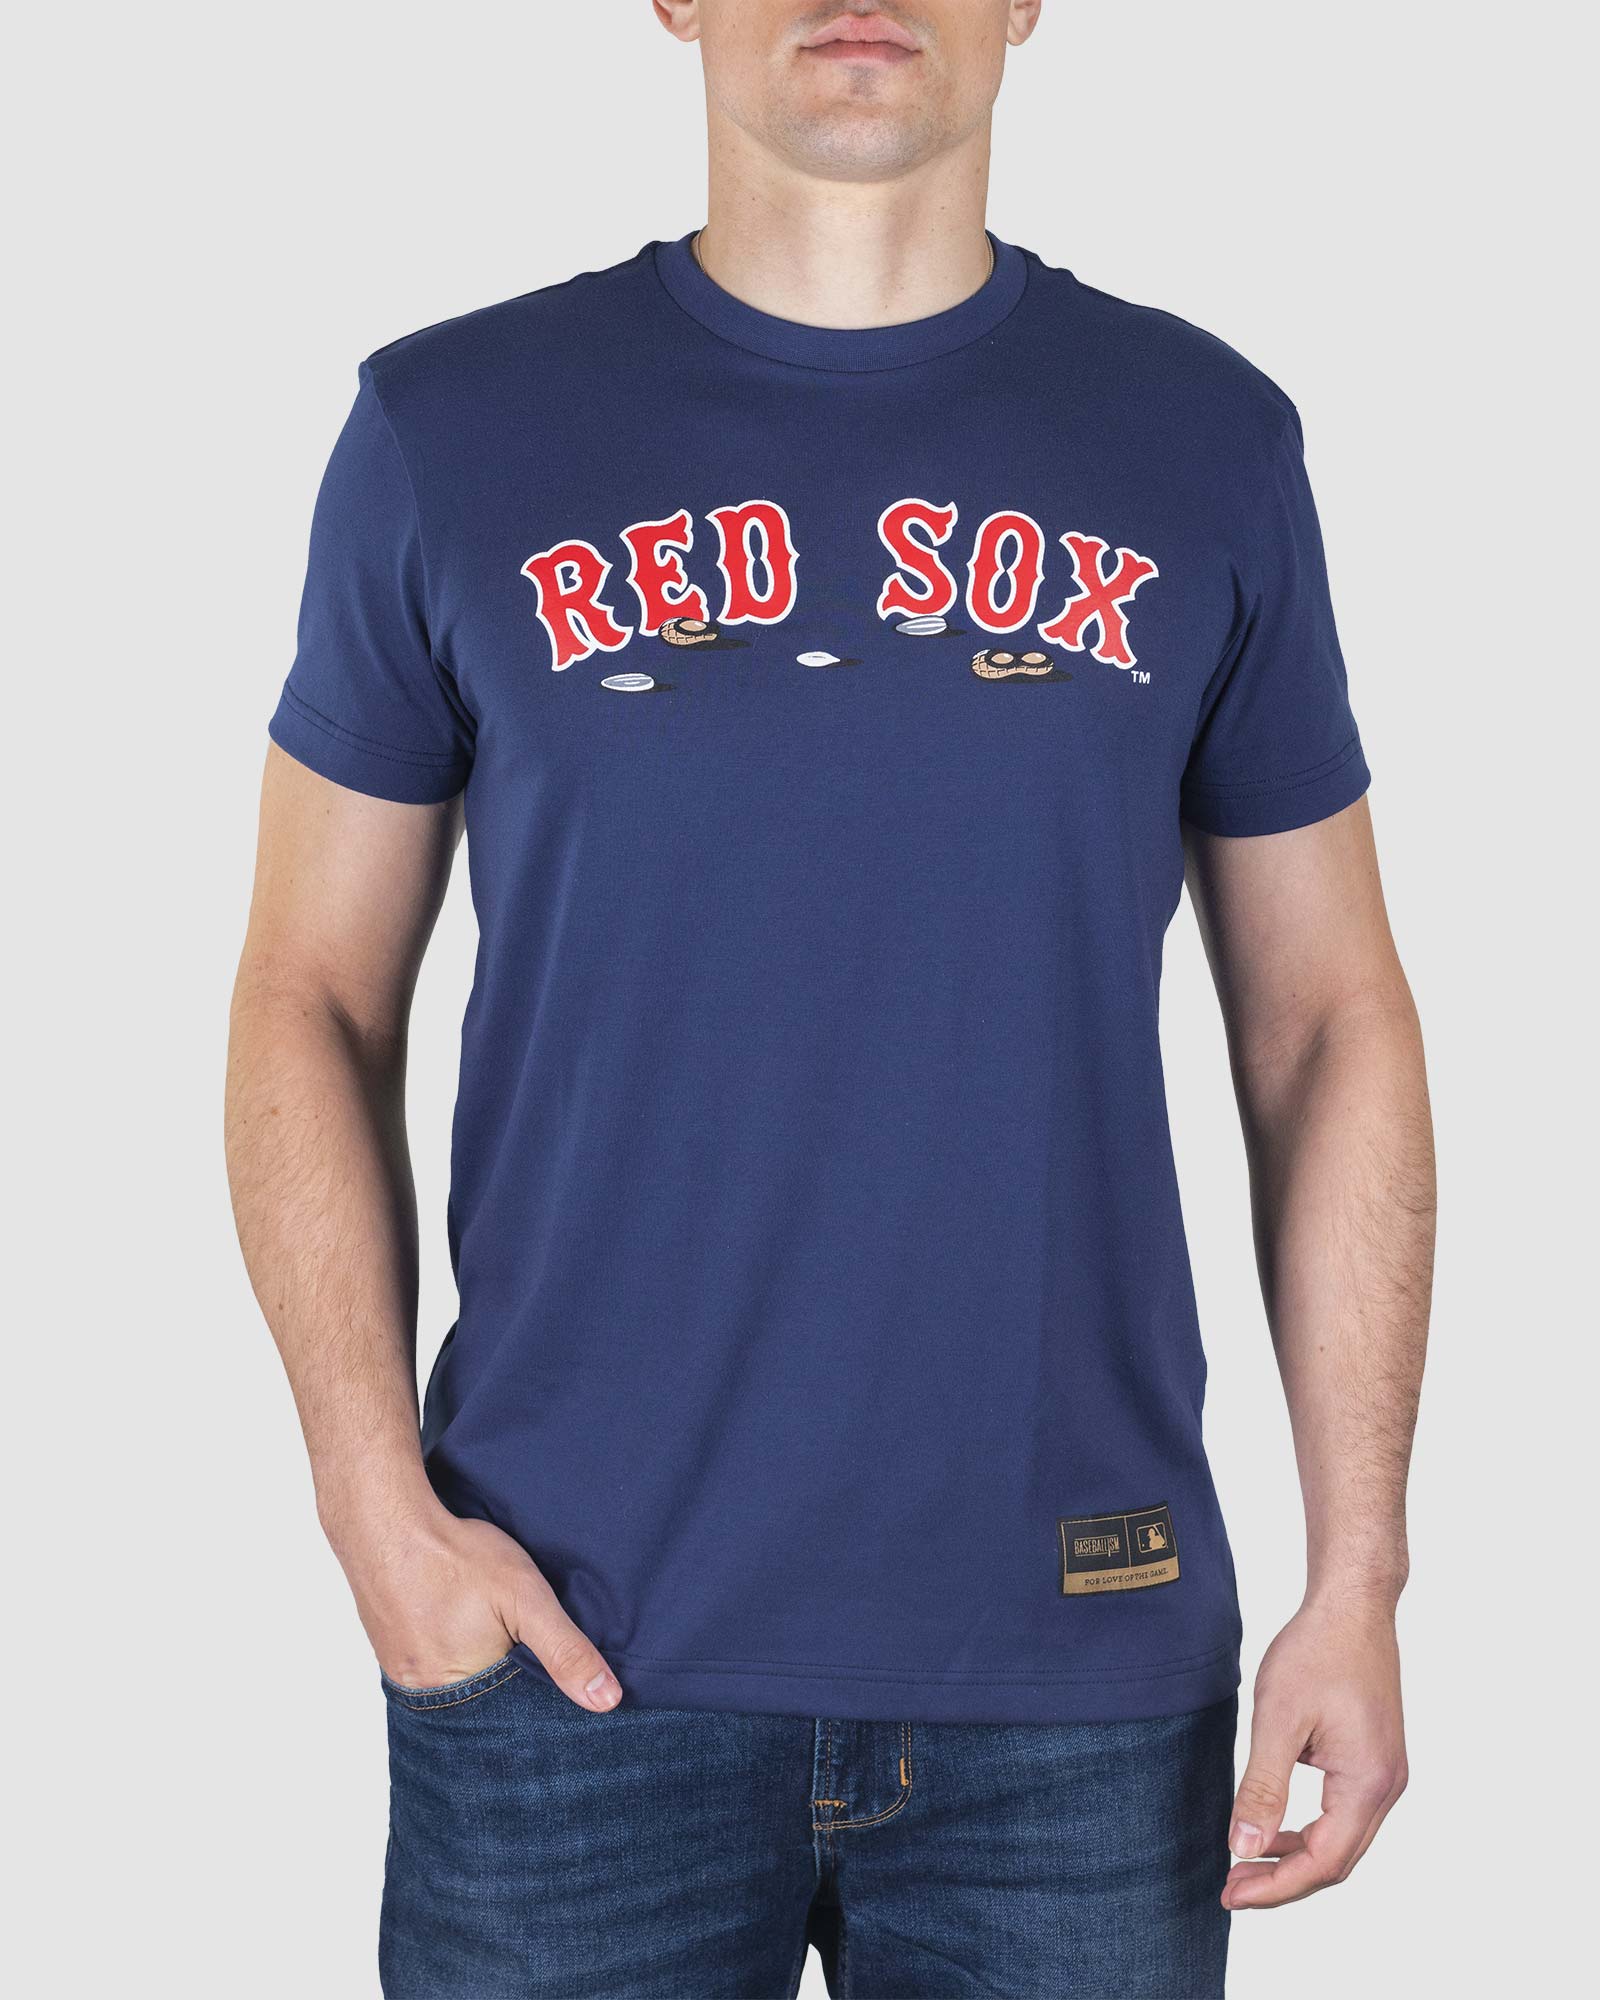 MLB Boston Red Sox (Chris Sale) Men's T-Shirt.